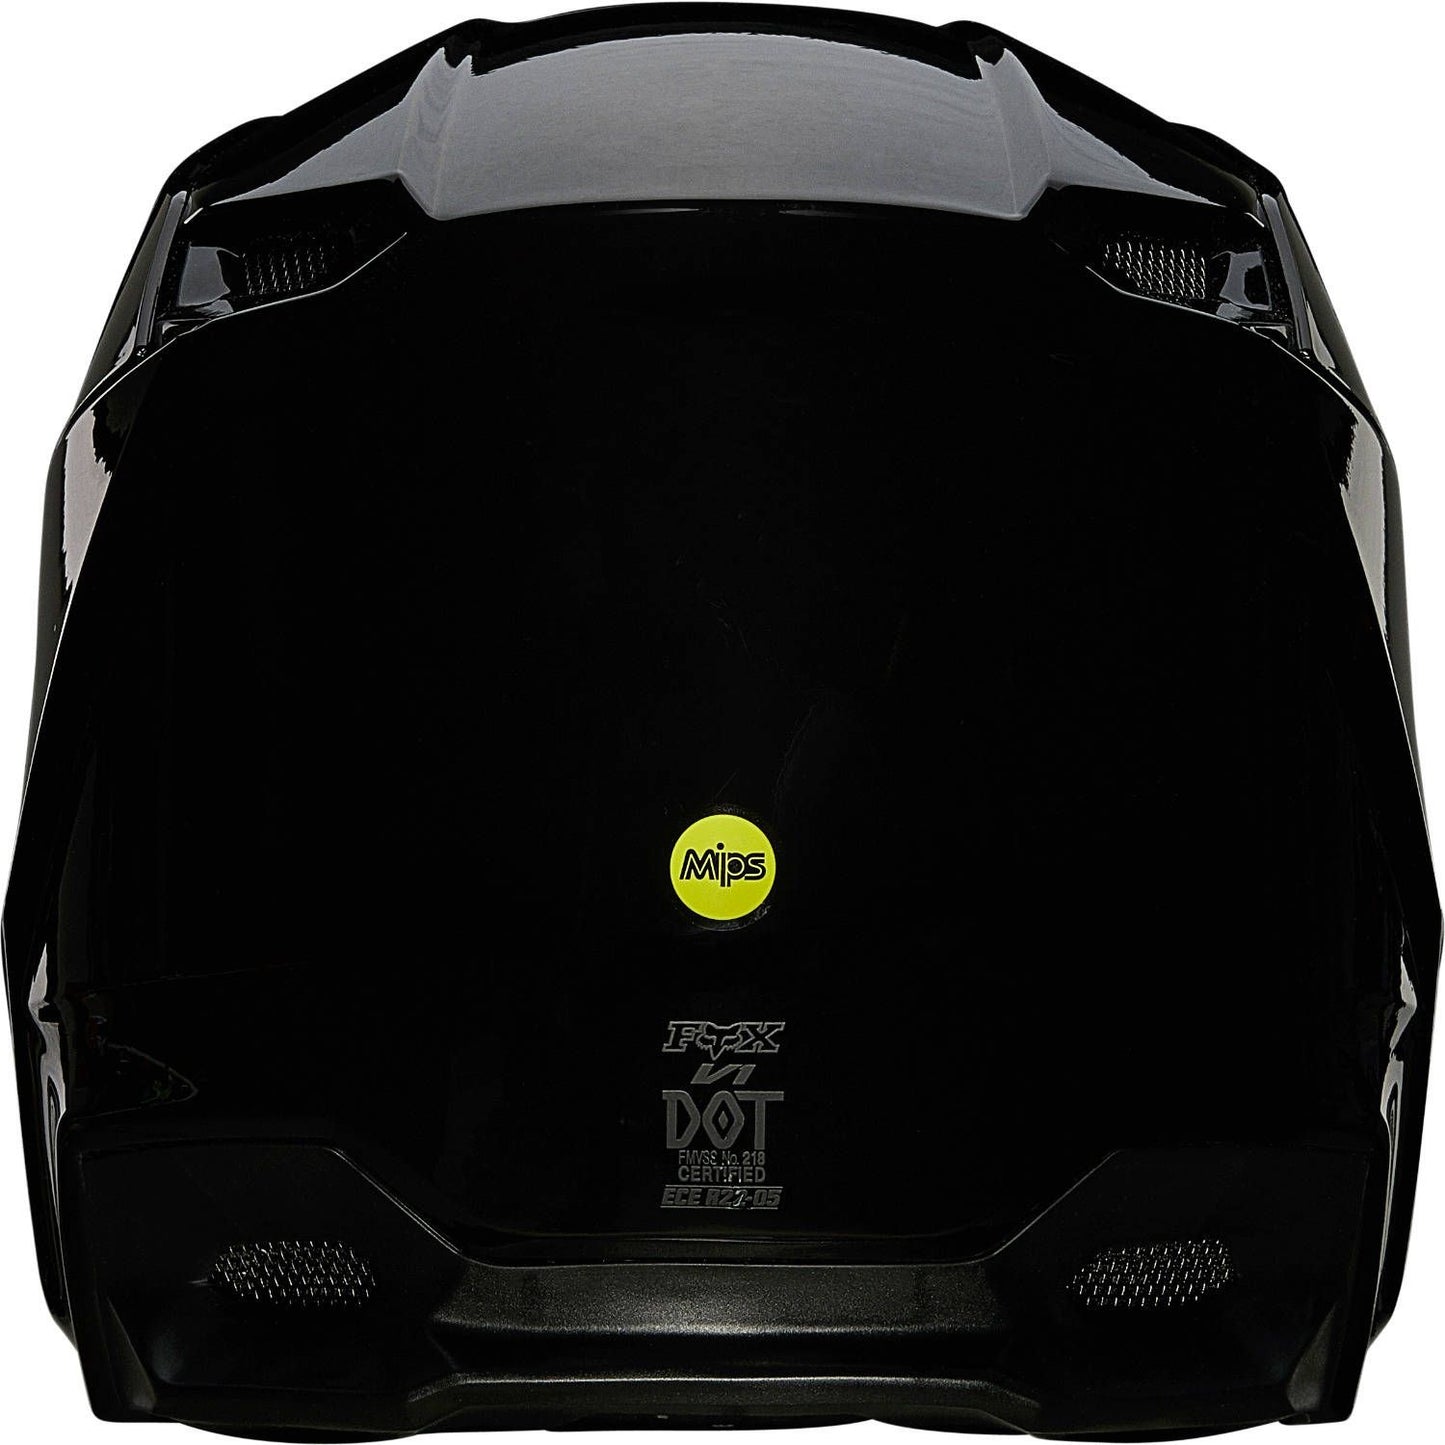 Fox Racing V1 Plaic Helmet Black - Ottawa Goodtime Centre 